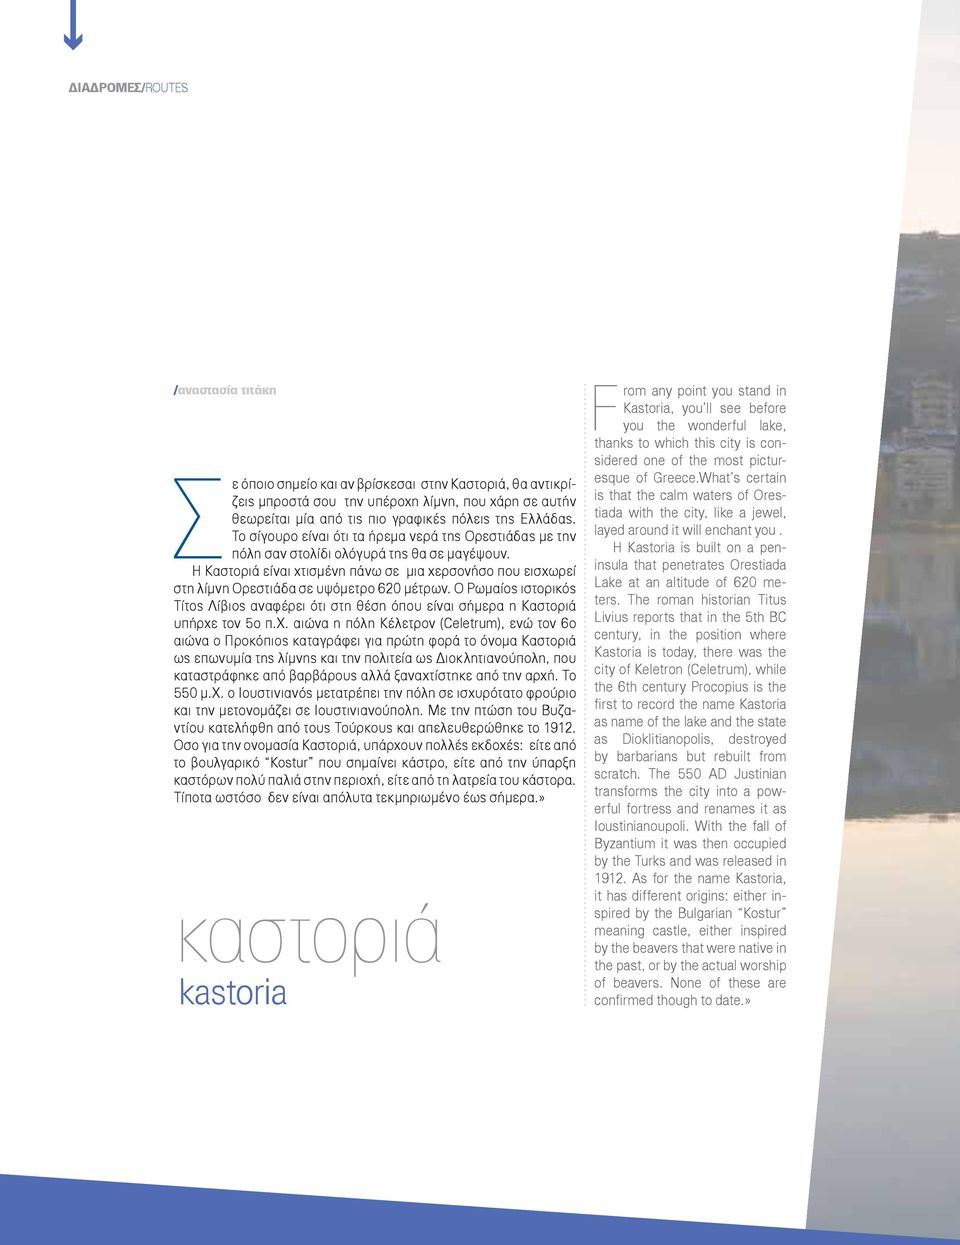 H Kαστοριά είναι χτισμένη πάνω σε μια χερσονήσο που εισχωρεί στη λίμνη Ορεστιάδα σε υψόμετρο 620 μέτρων.